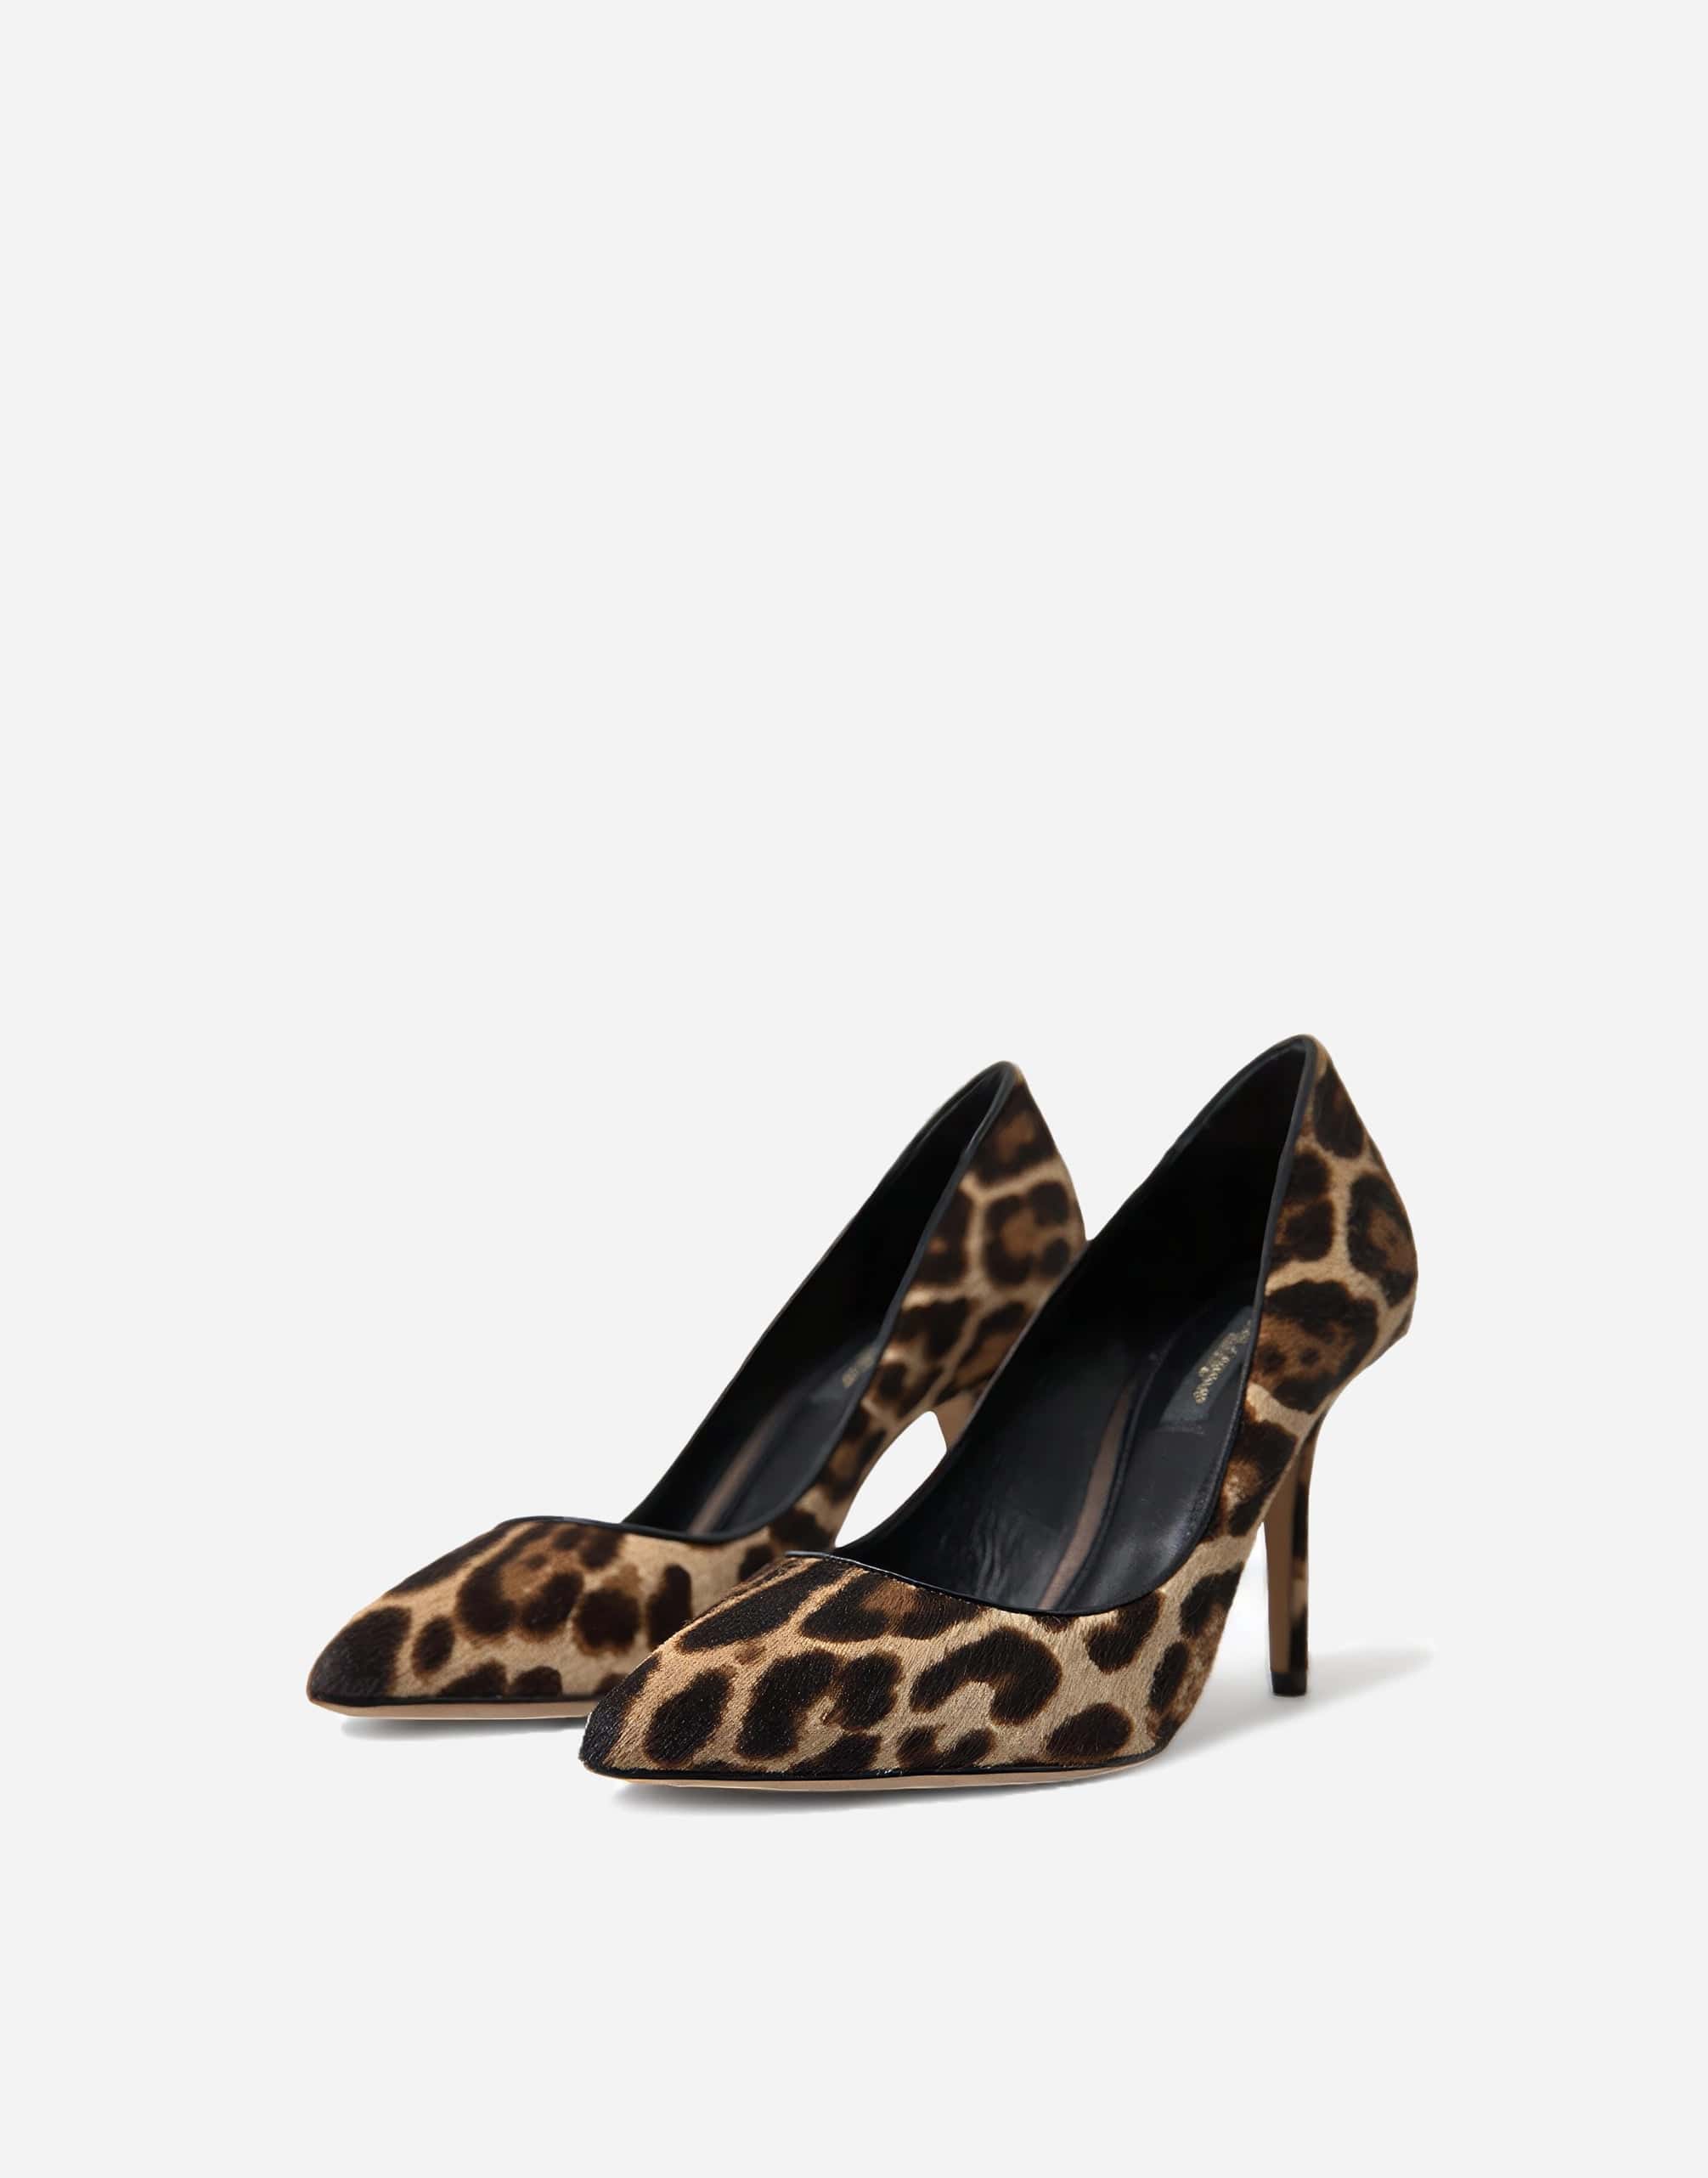 Dolce & Gabbana Leopard Print Stiletto Pumps